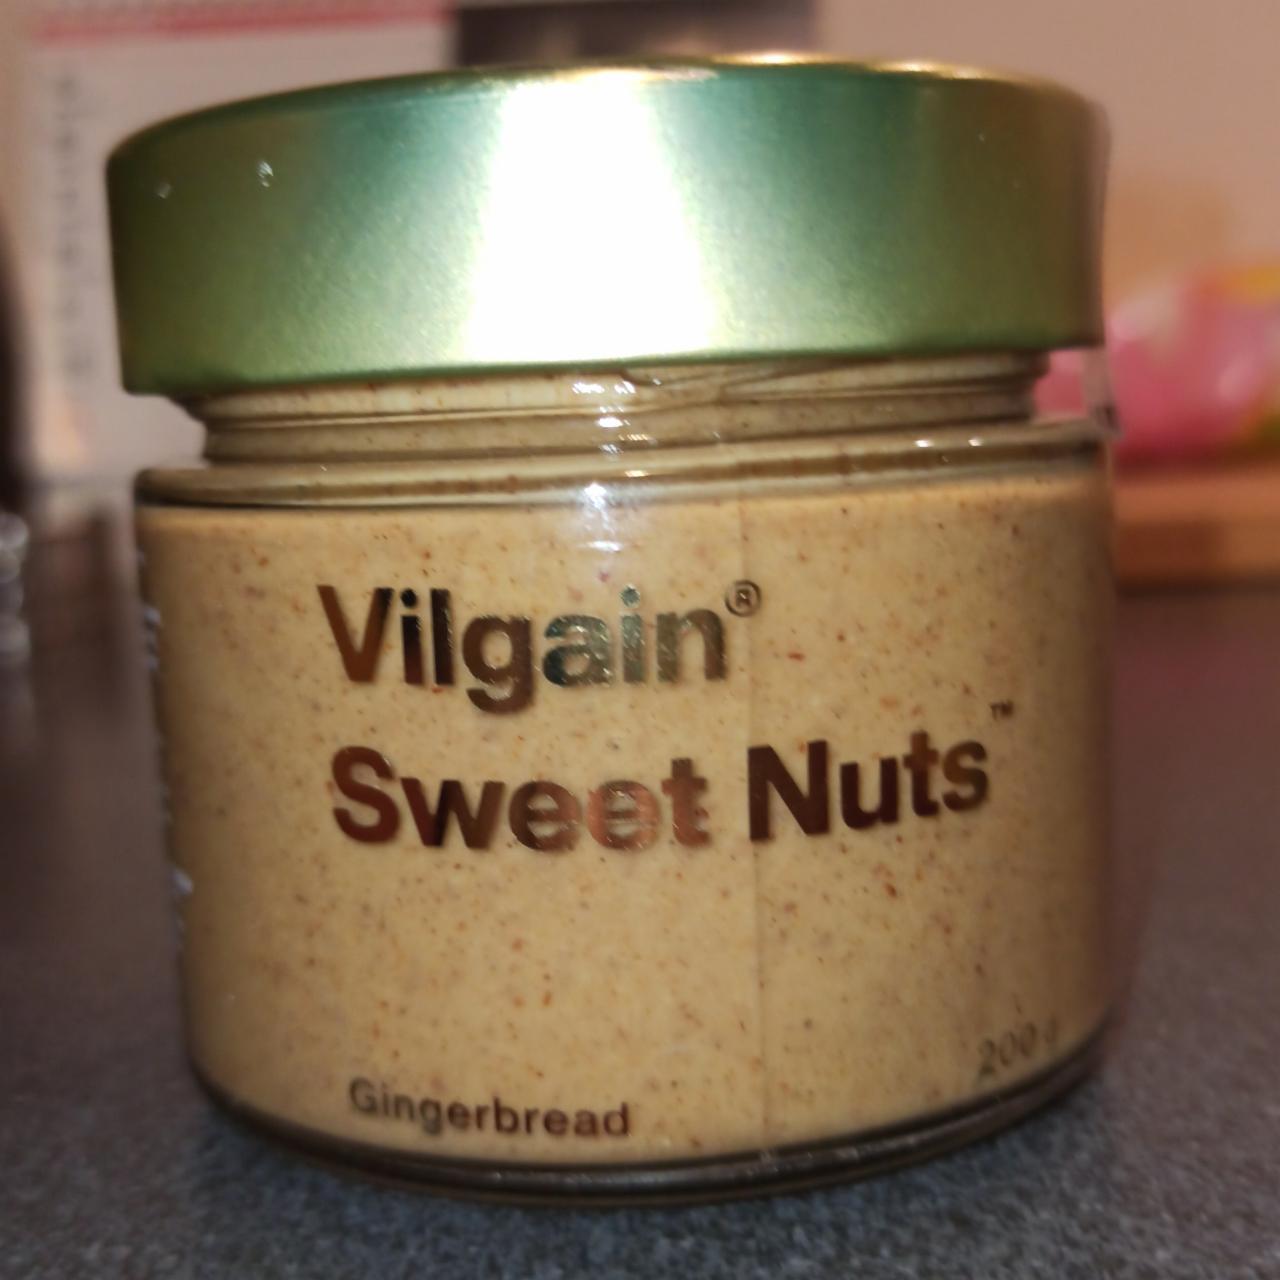 Fotografie - Sweet Nuts Gingerbread Vilgain